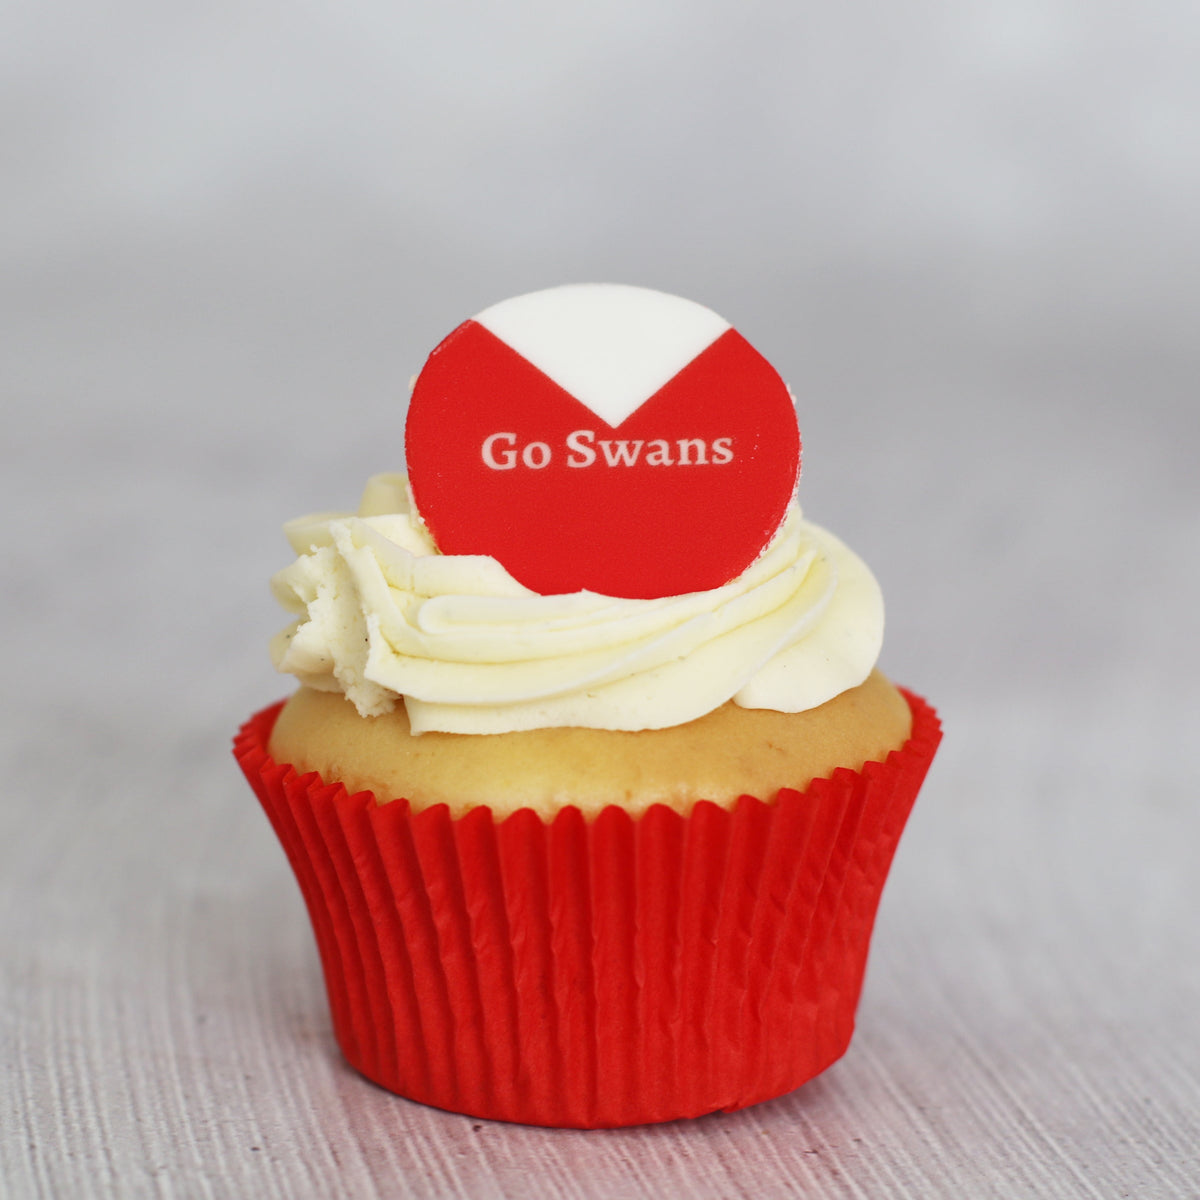 Go Swans - Football Cupcakes Cupcakes The Cupcake Queens 